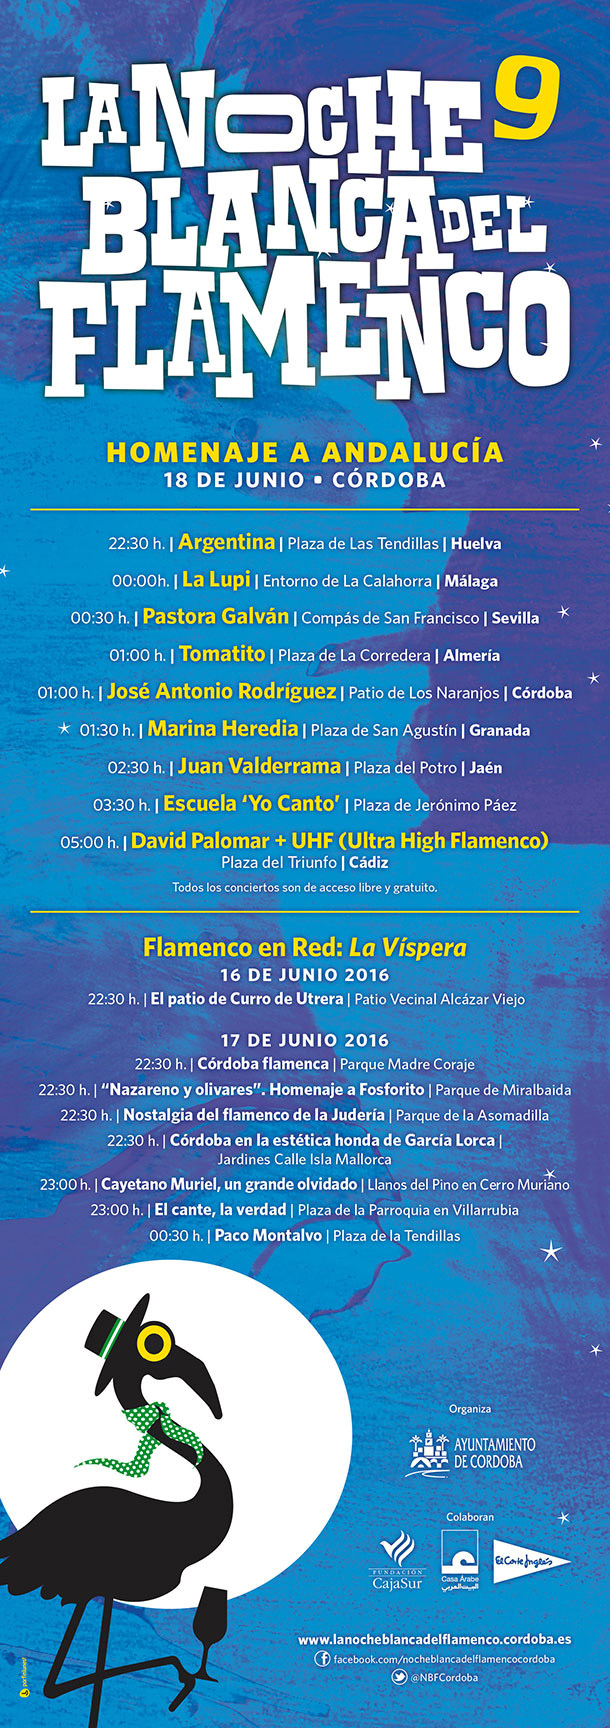 Noche Blanca del Flamenco 2016